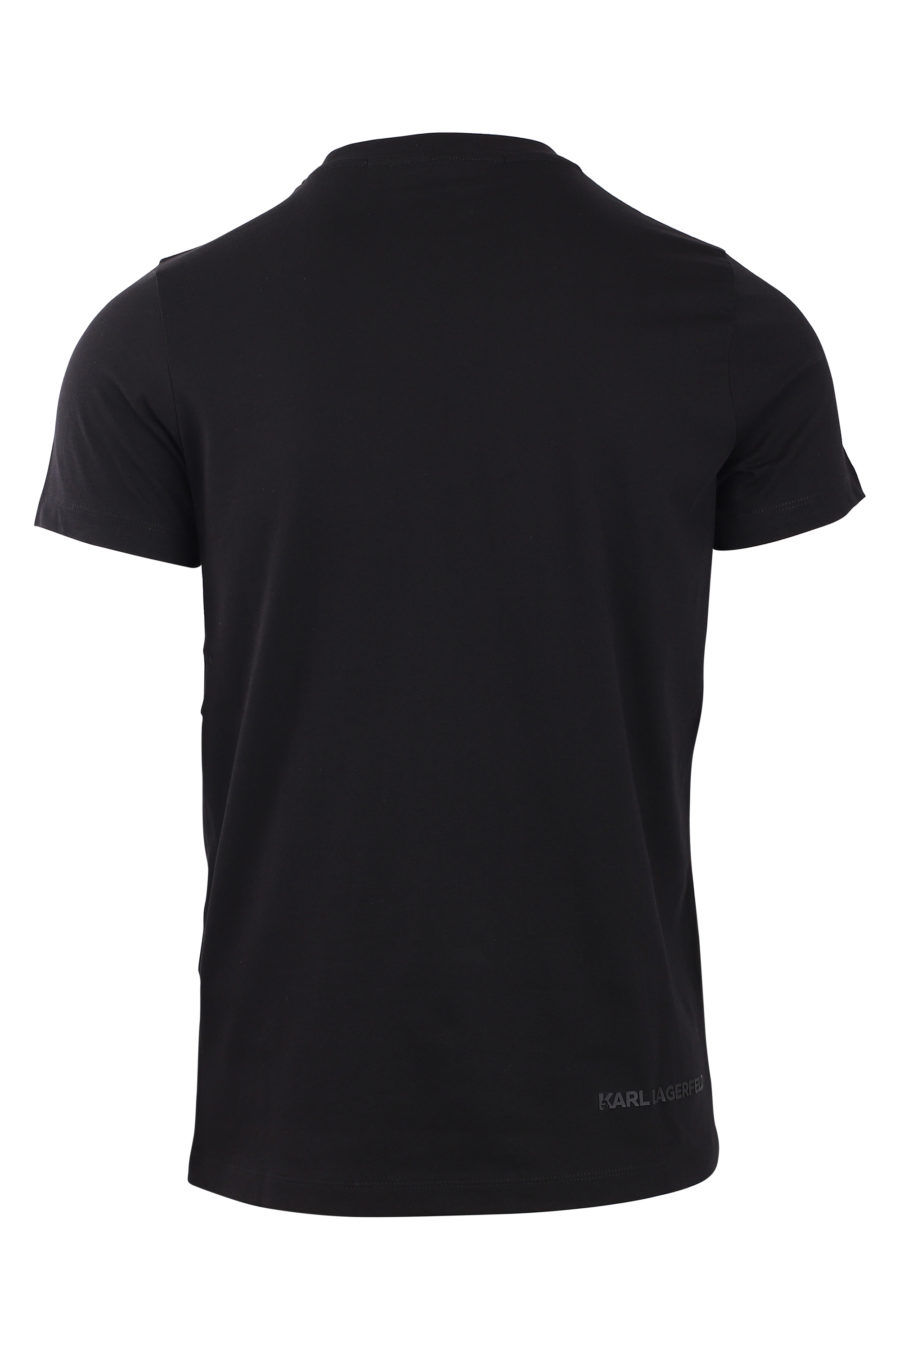 T-shirt noir avec maxi logo fuchsia - IMG 0808